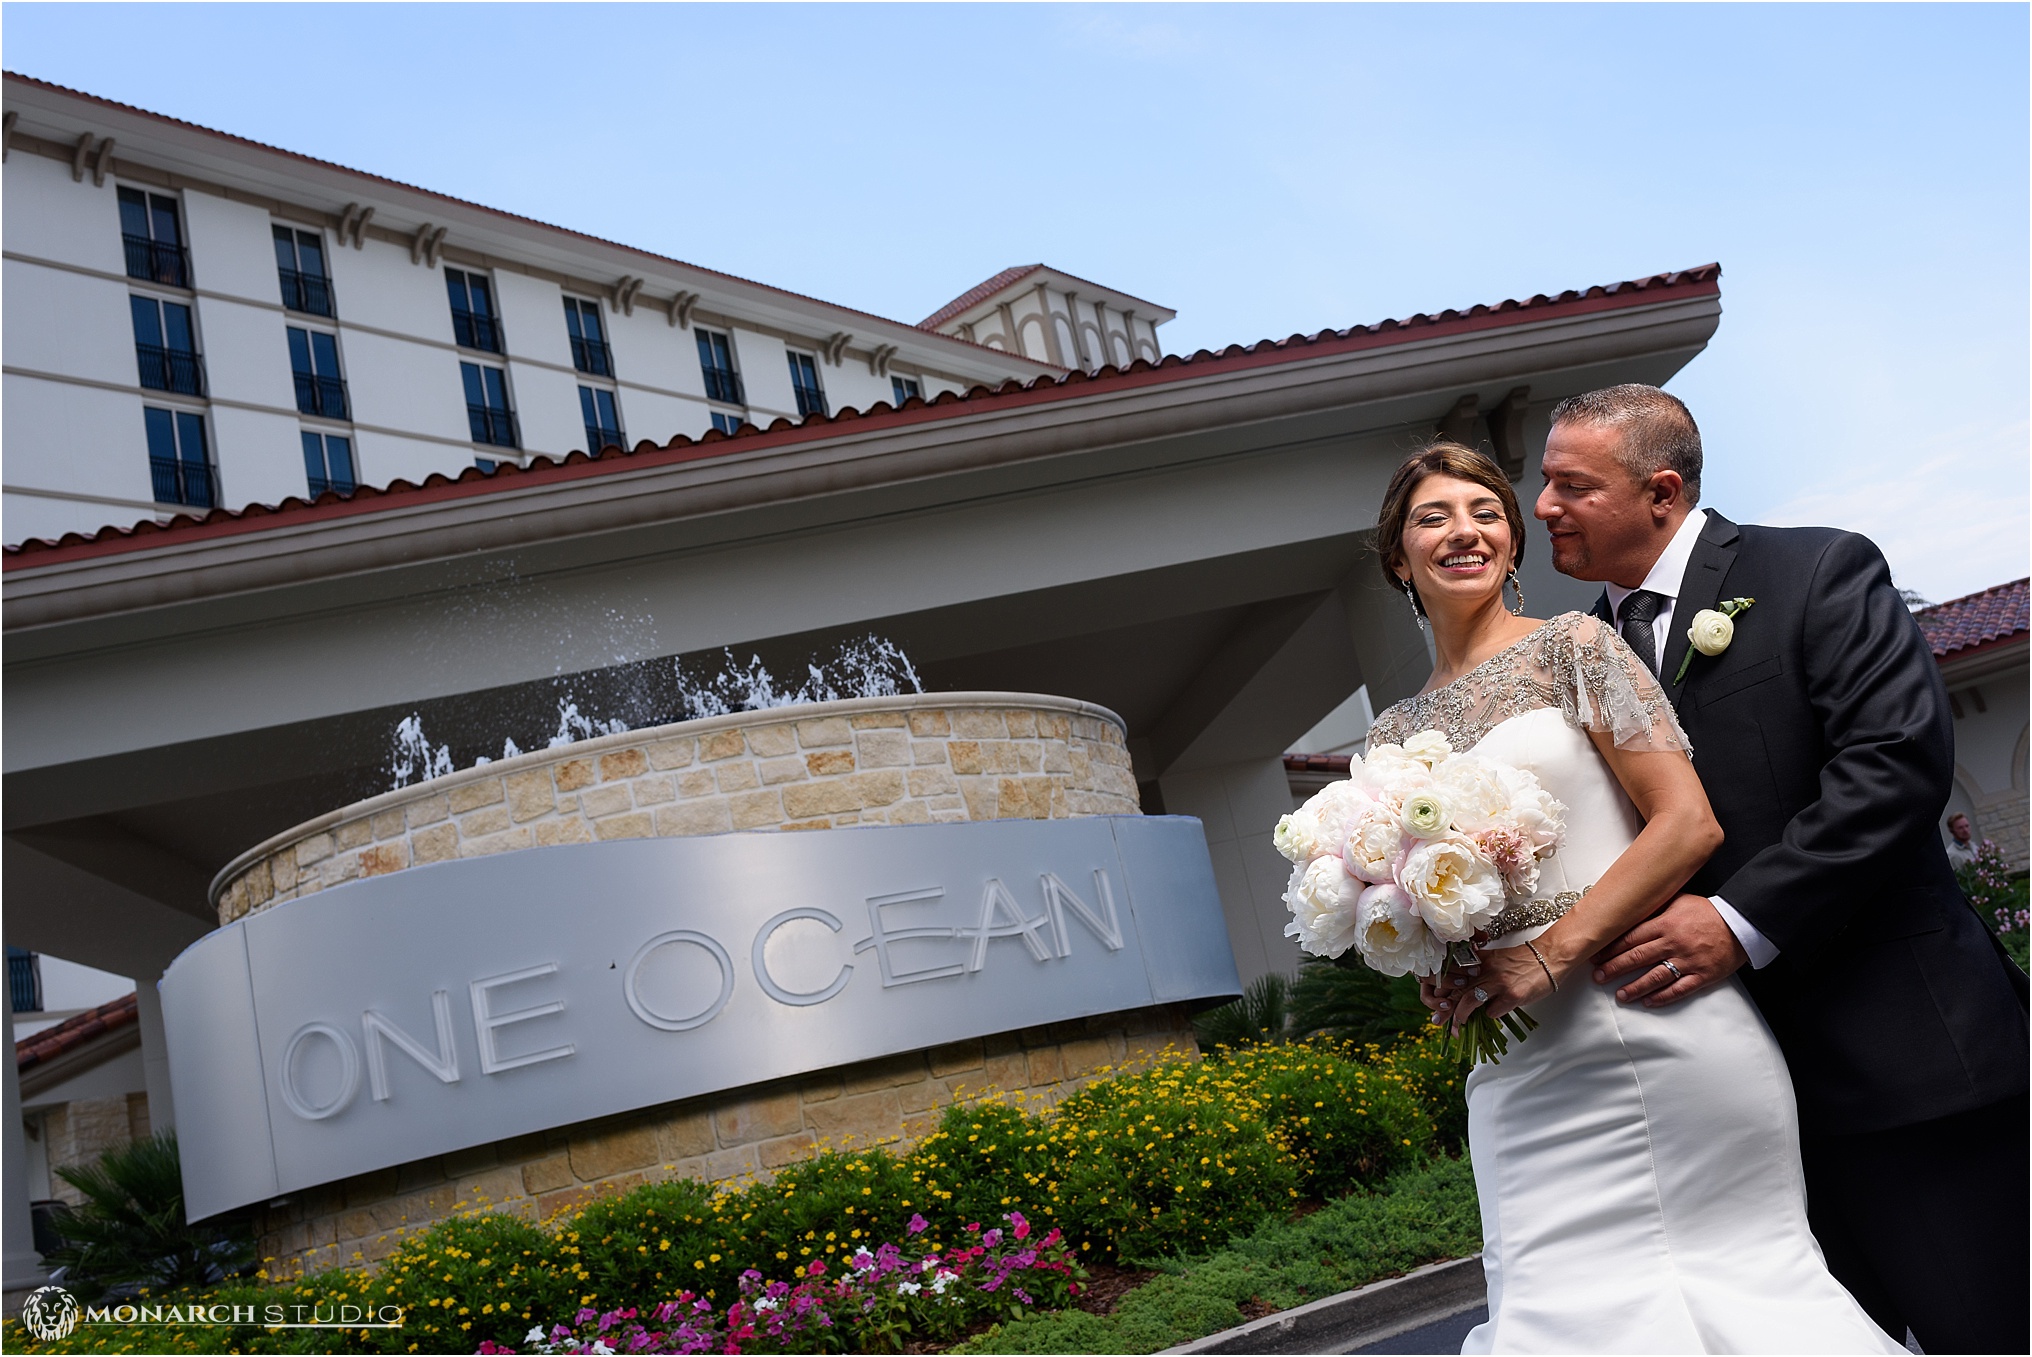 Jacksonville-Wedding-Photographer-One-Ocean-053.jpg